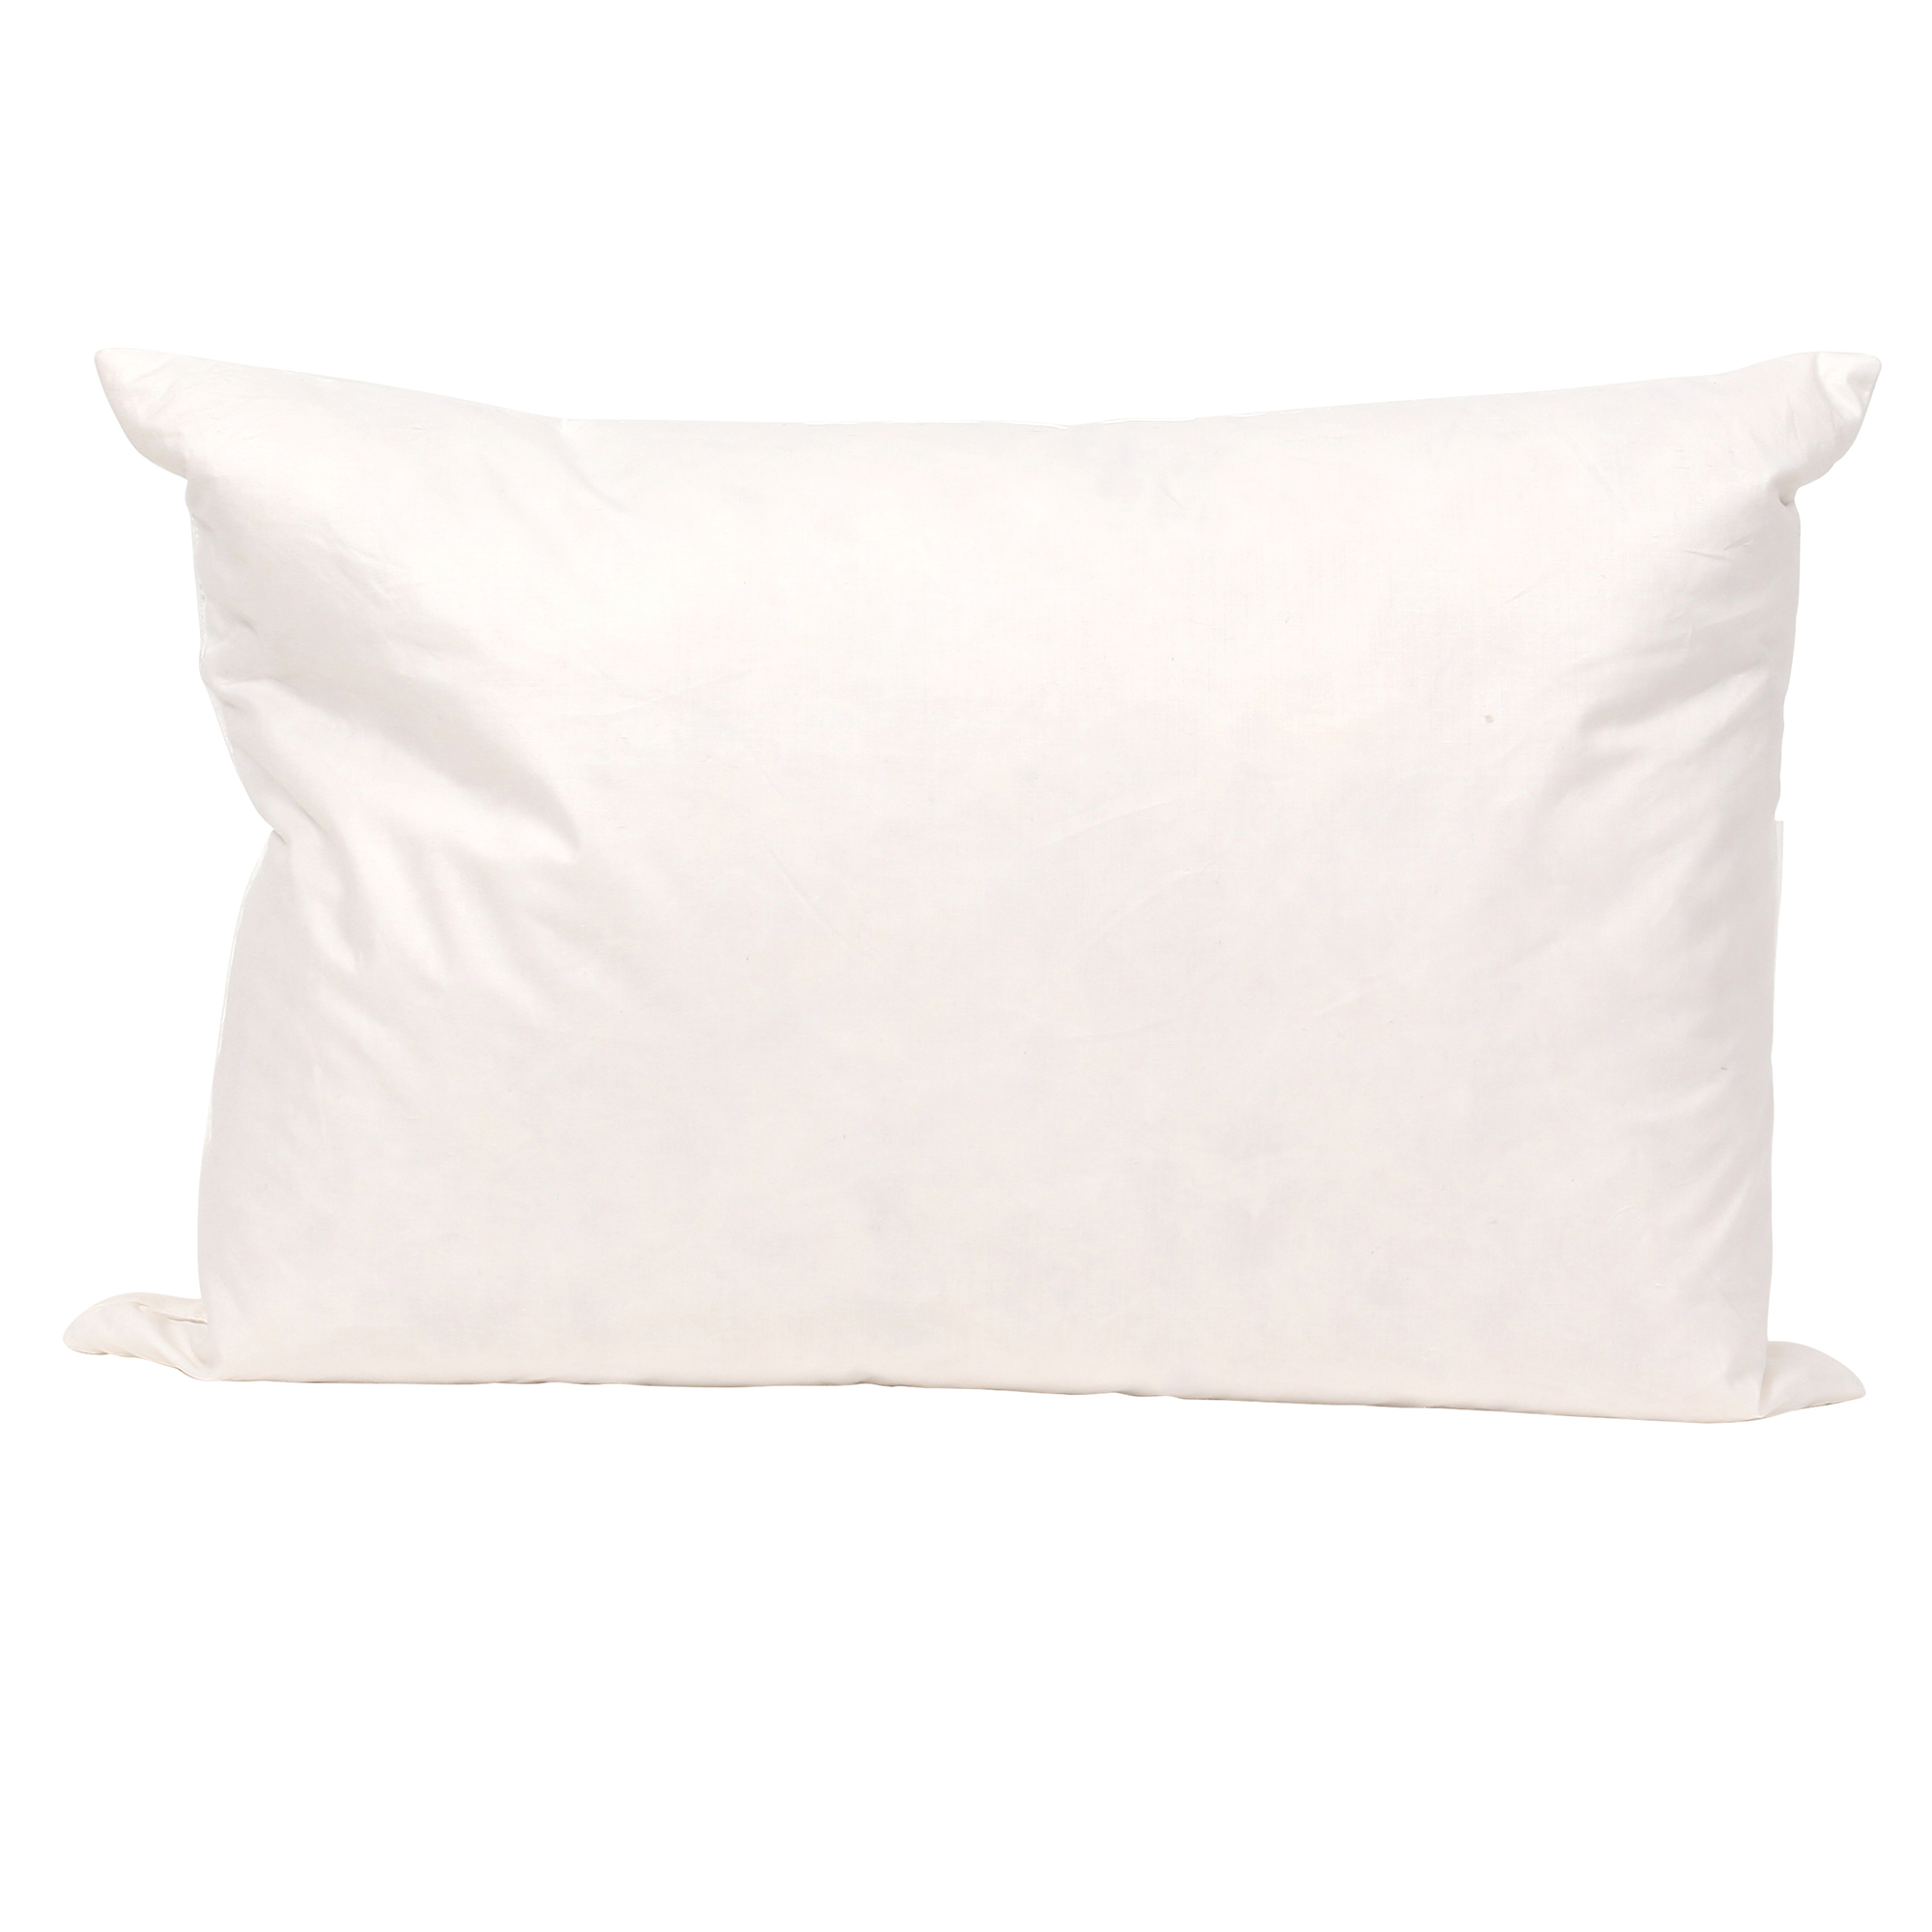 Decorator's Choice Pillow Insert - 12" x 16" - image 2 of 3